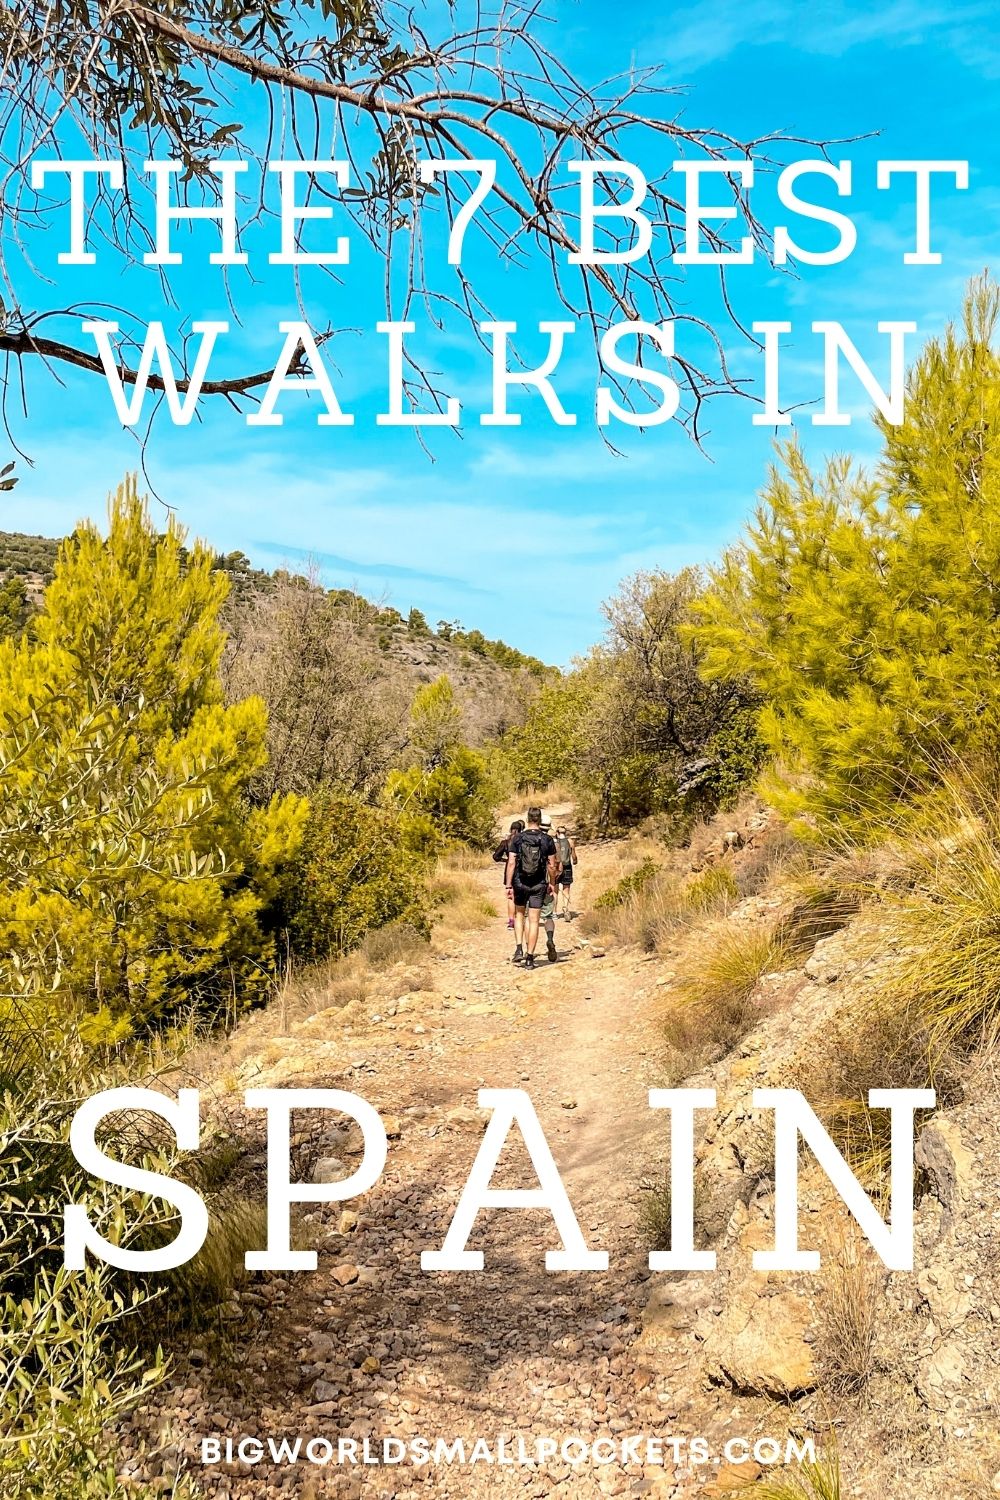 The 7 Best Walks in Spain